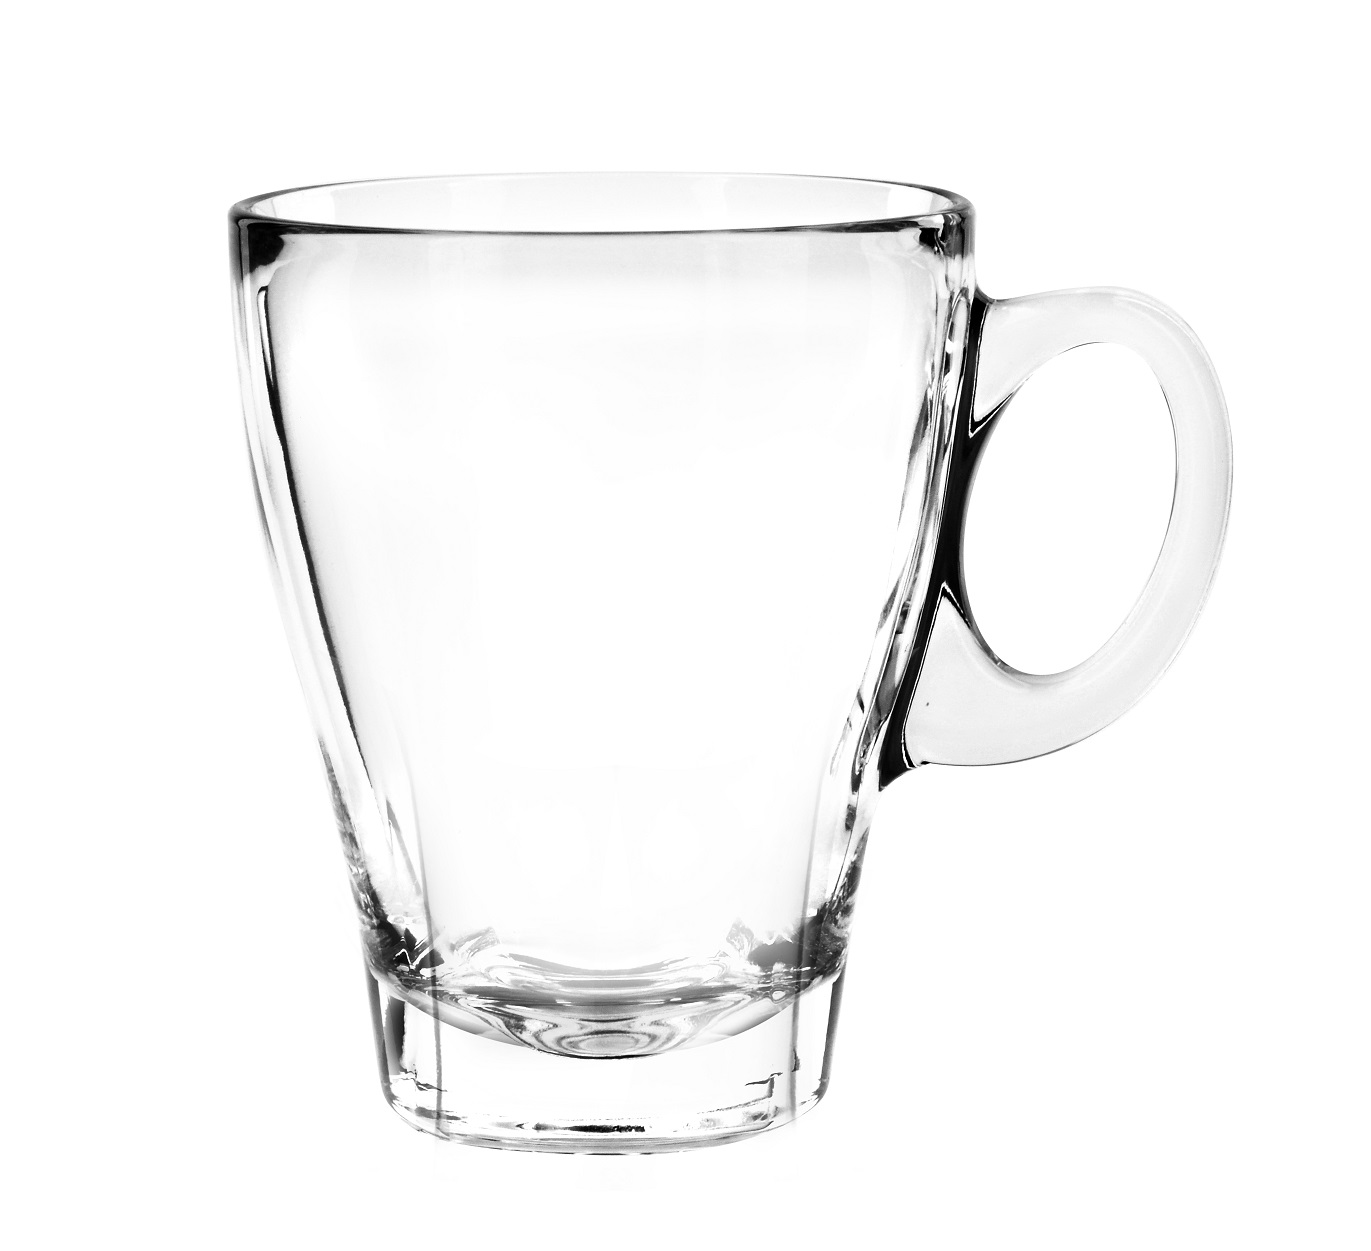 Cuisivin Caffe Americano 12oz Glass Cups Set of 4